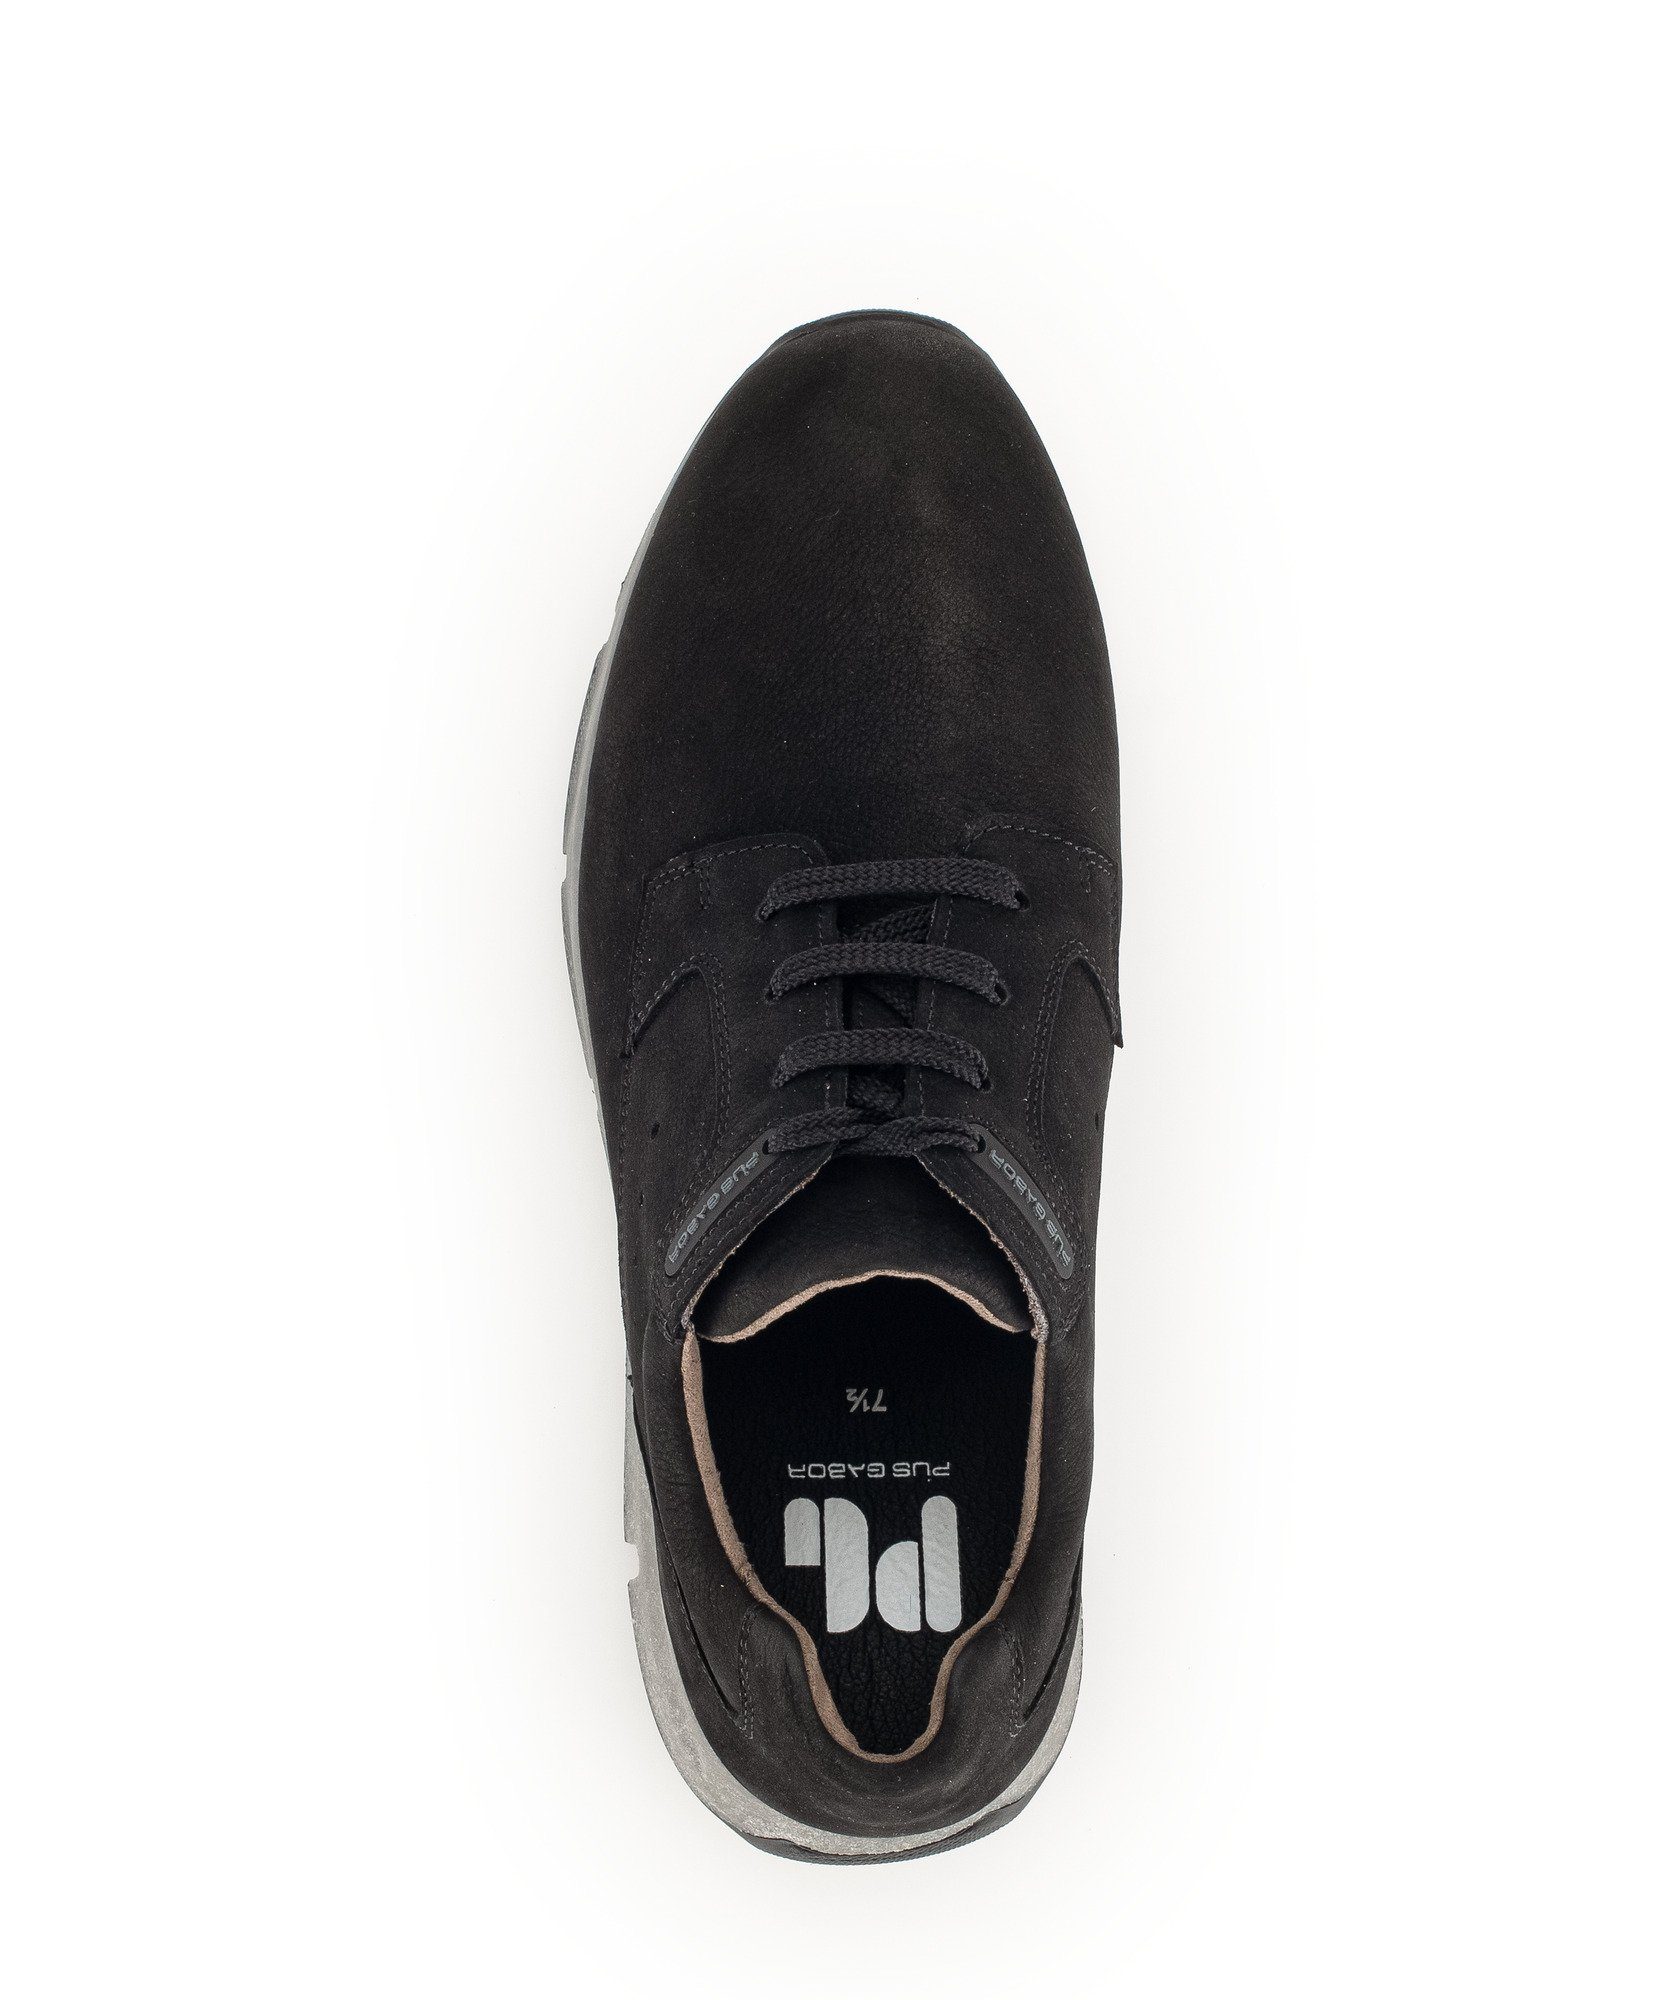 (black) Sneaker Schwarz Pius 27 / Gabor